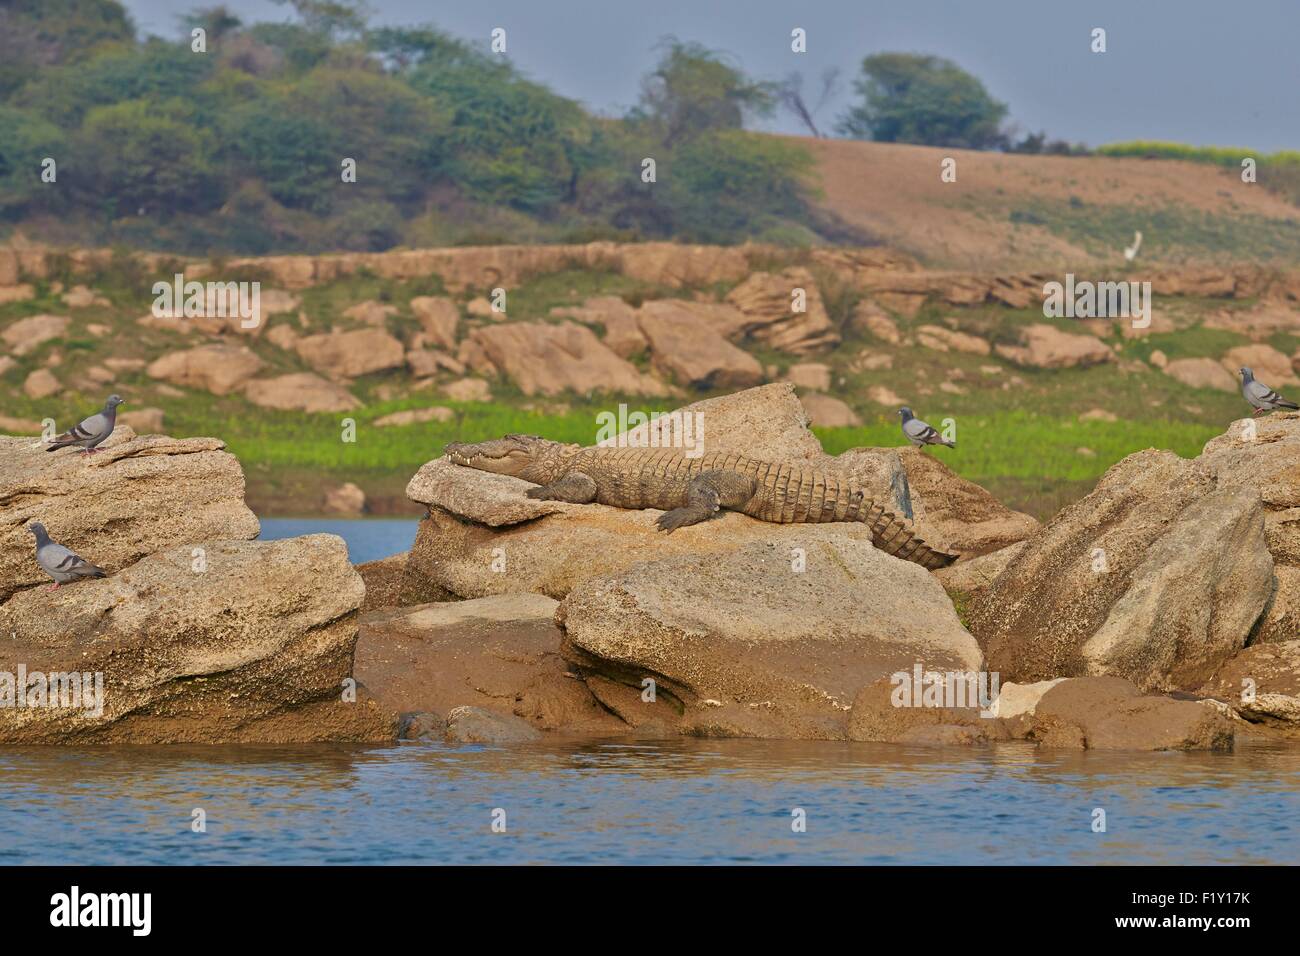 India, Uttar Pradesh state, Chambal river, Mugger Crocodile or Indian Marsh Crocodile (Crocodylus palustris) lying on the shore Stock Photo